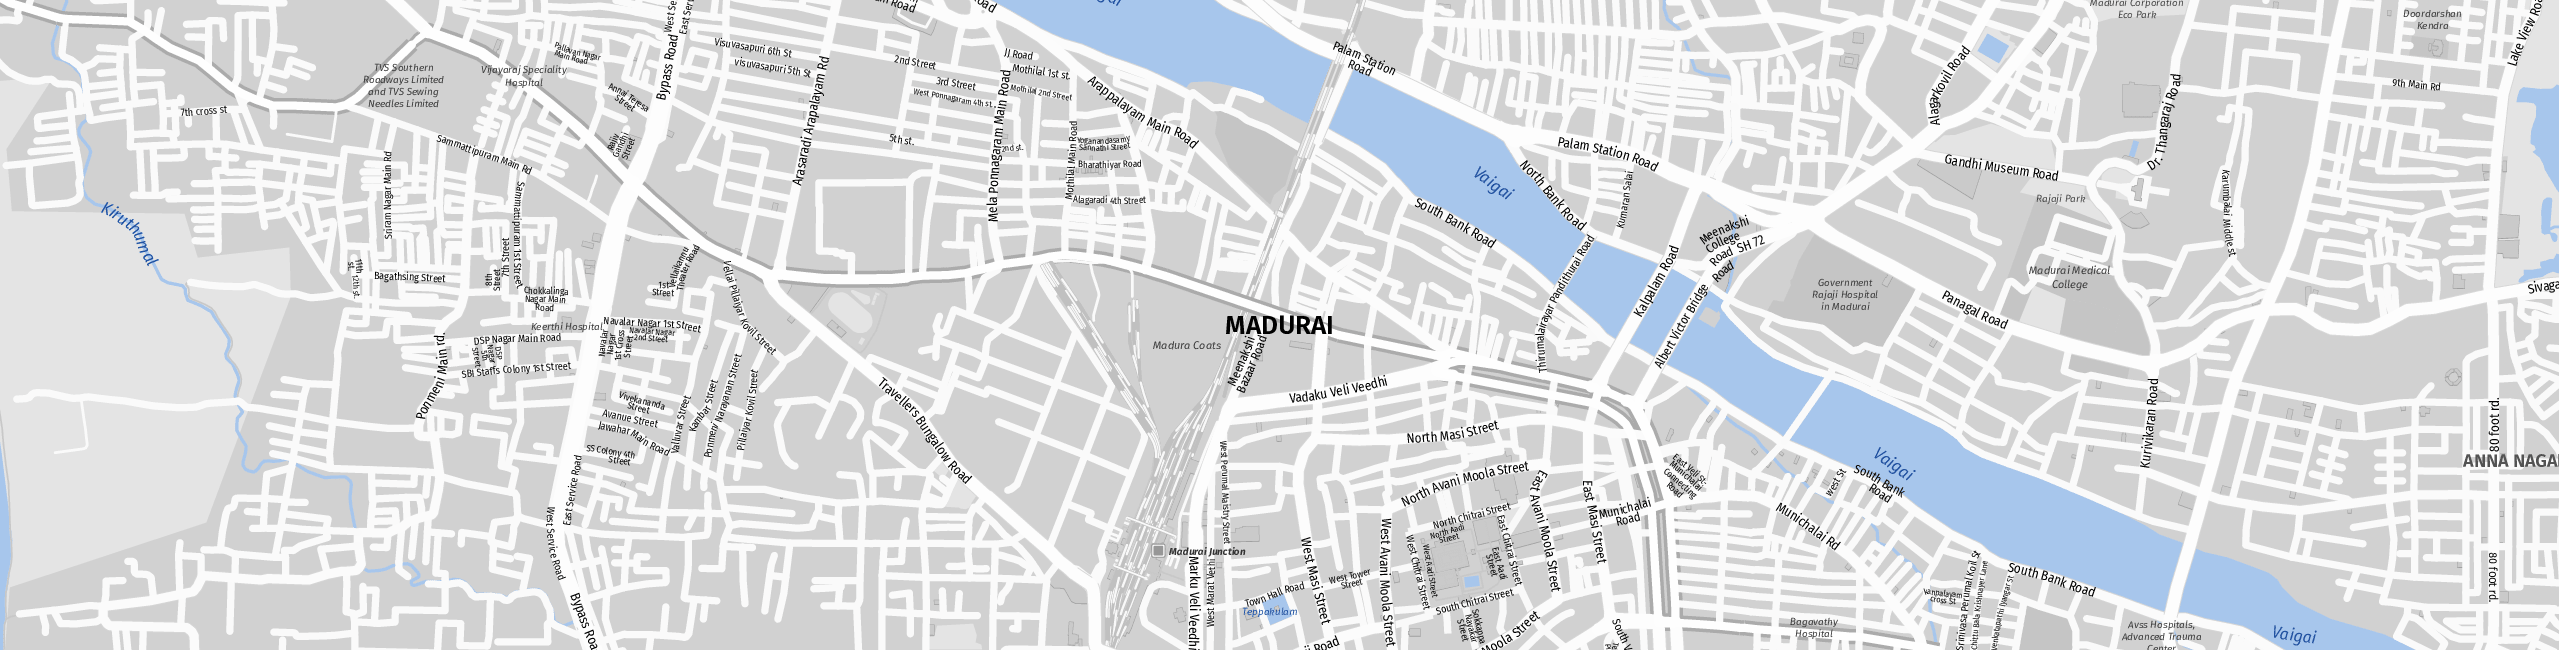 Stadtplan Madurai zum Downloaden.